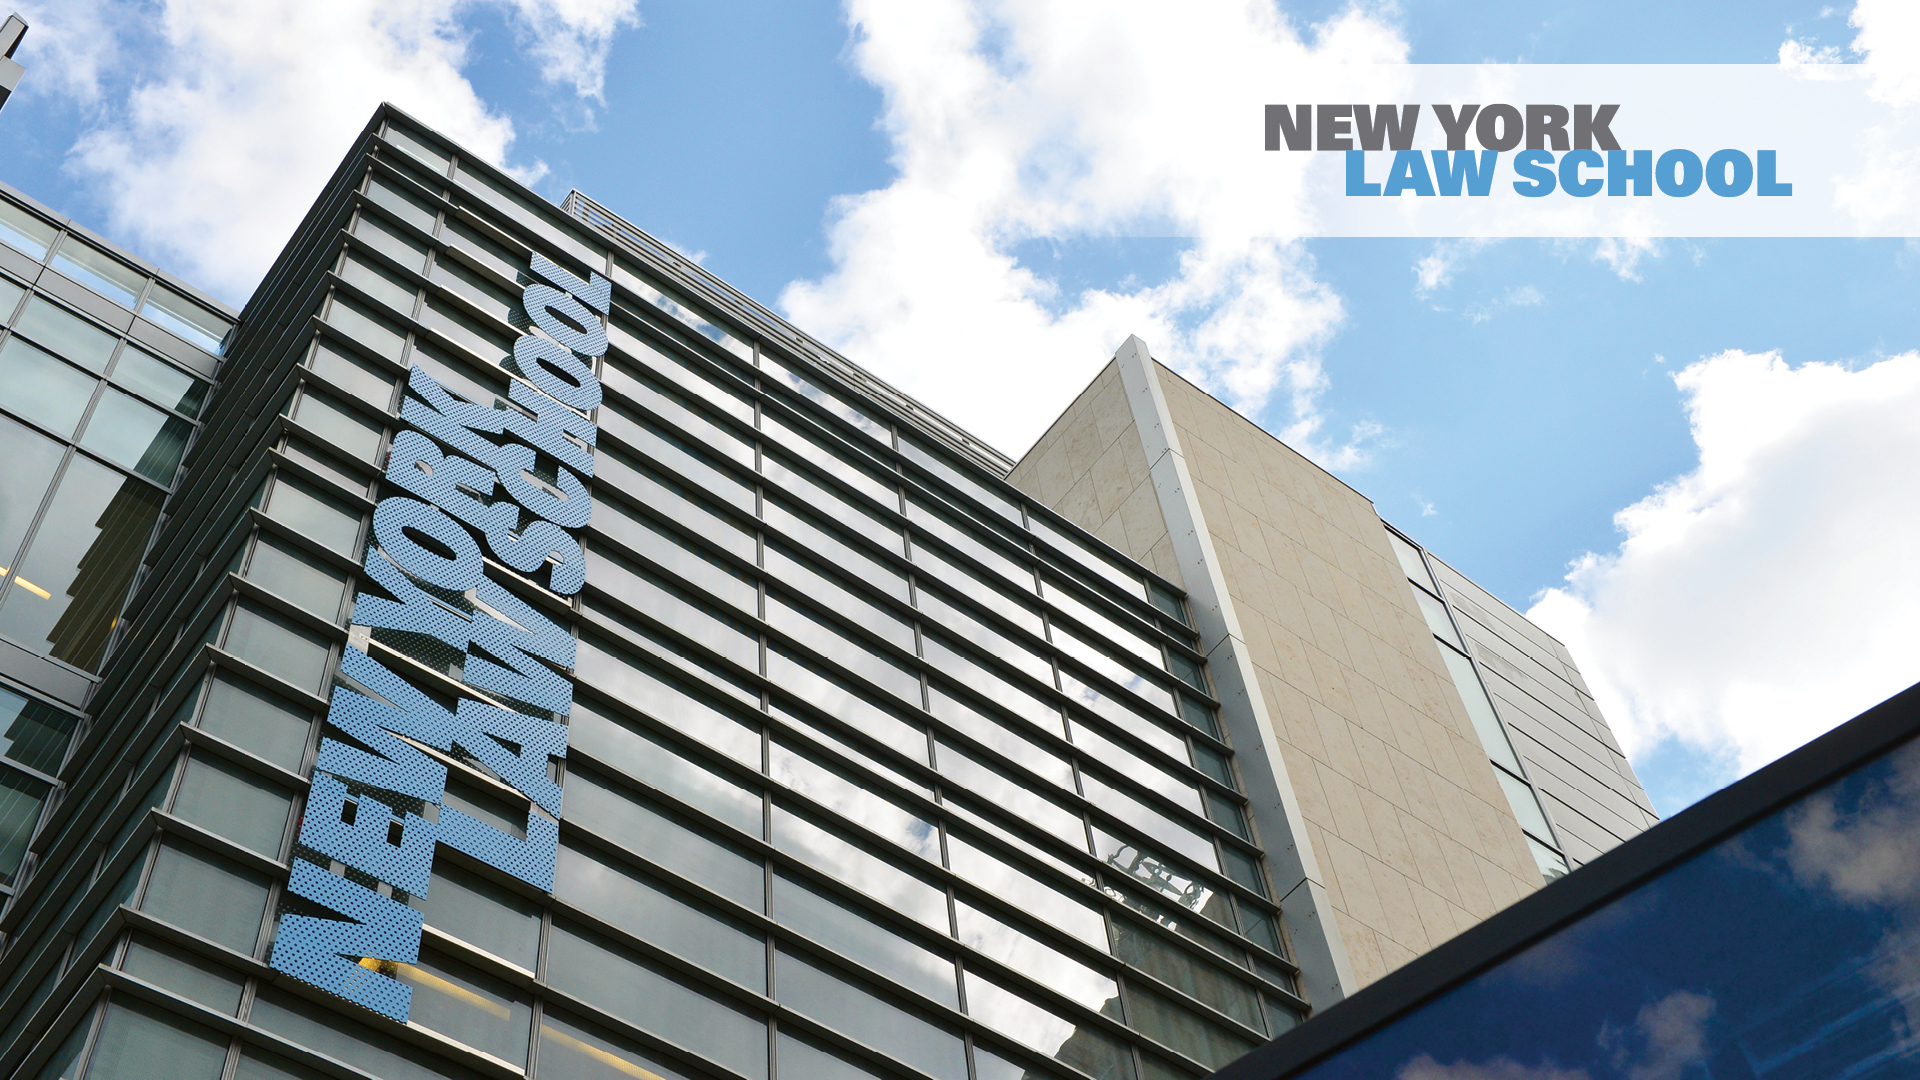 New York Law School building